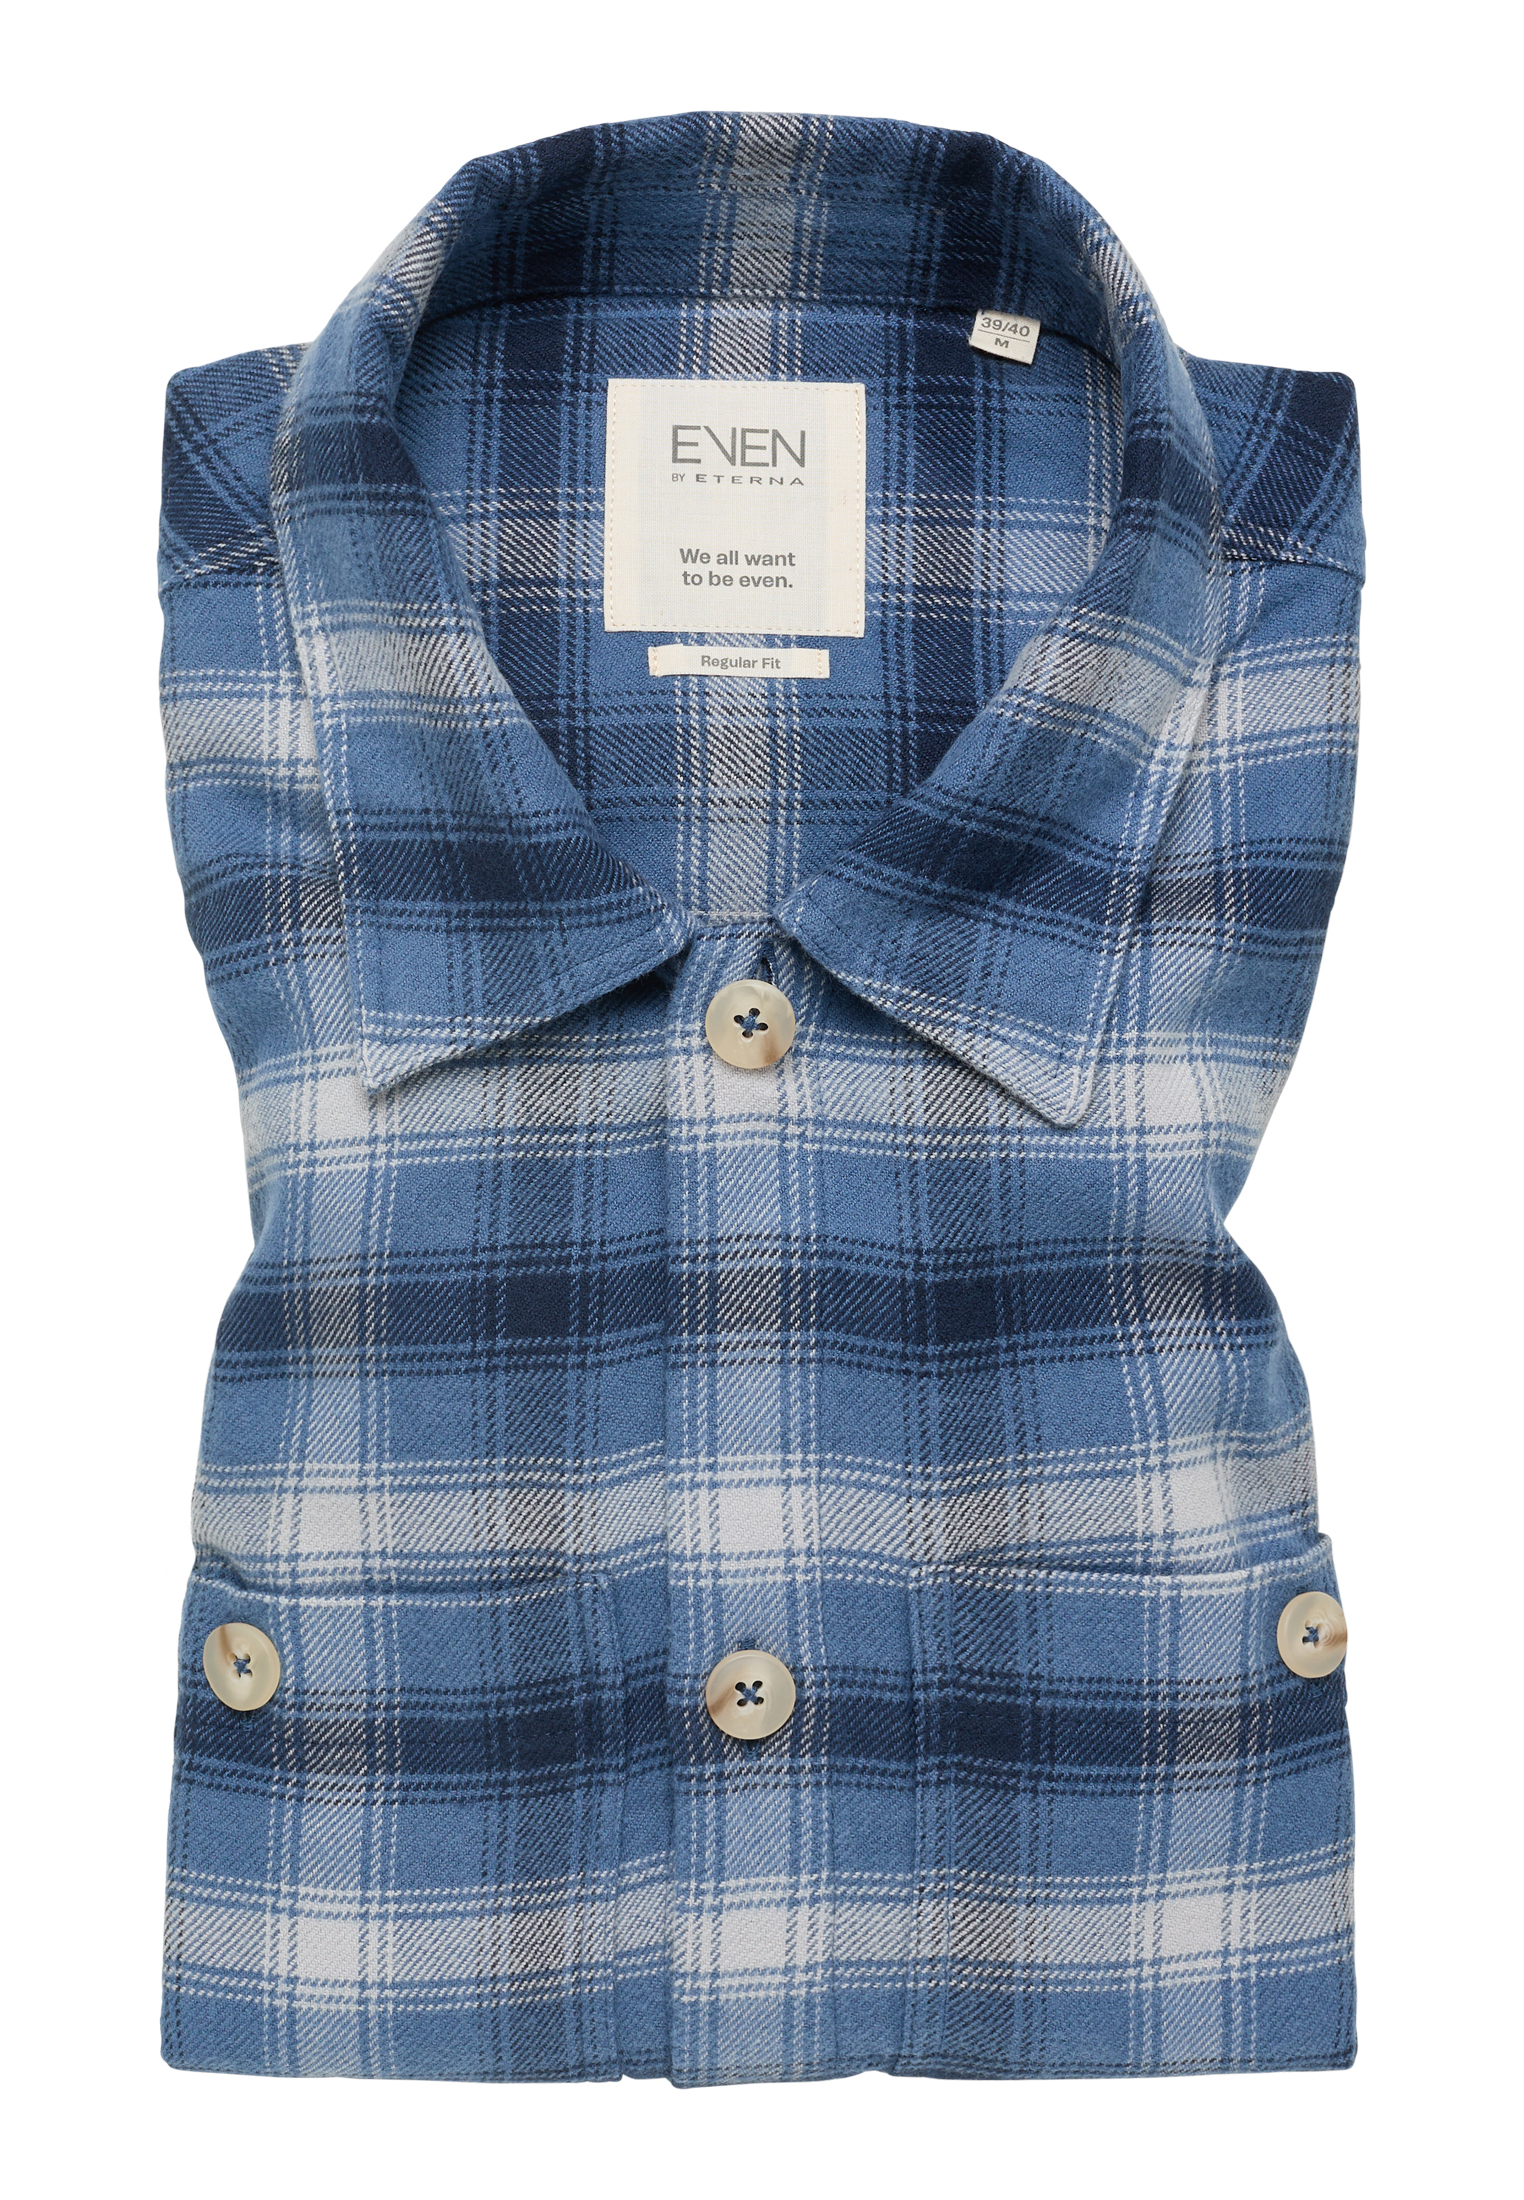 MODERN FIT Shirt in blue-gray checkered | blue-gray | M | long sleeve |  1JA00038-01-63-M-1/1